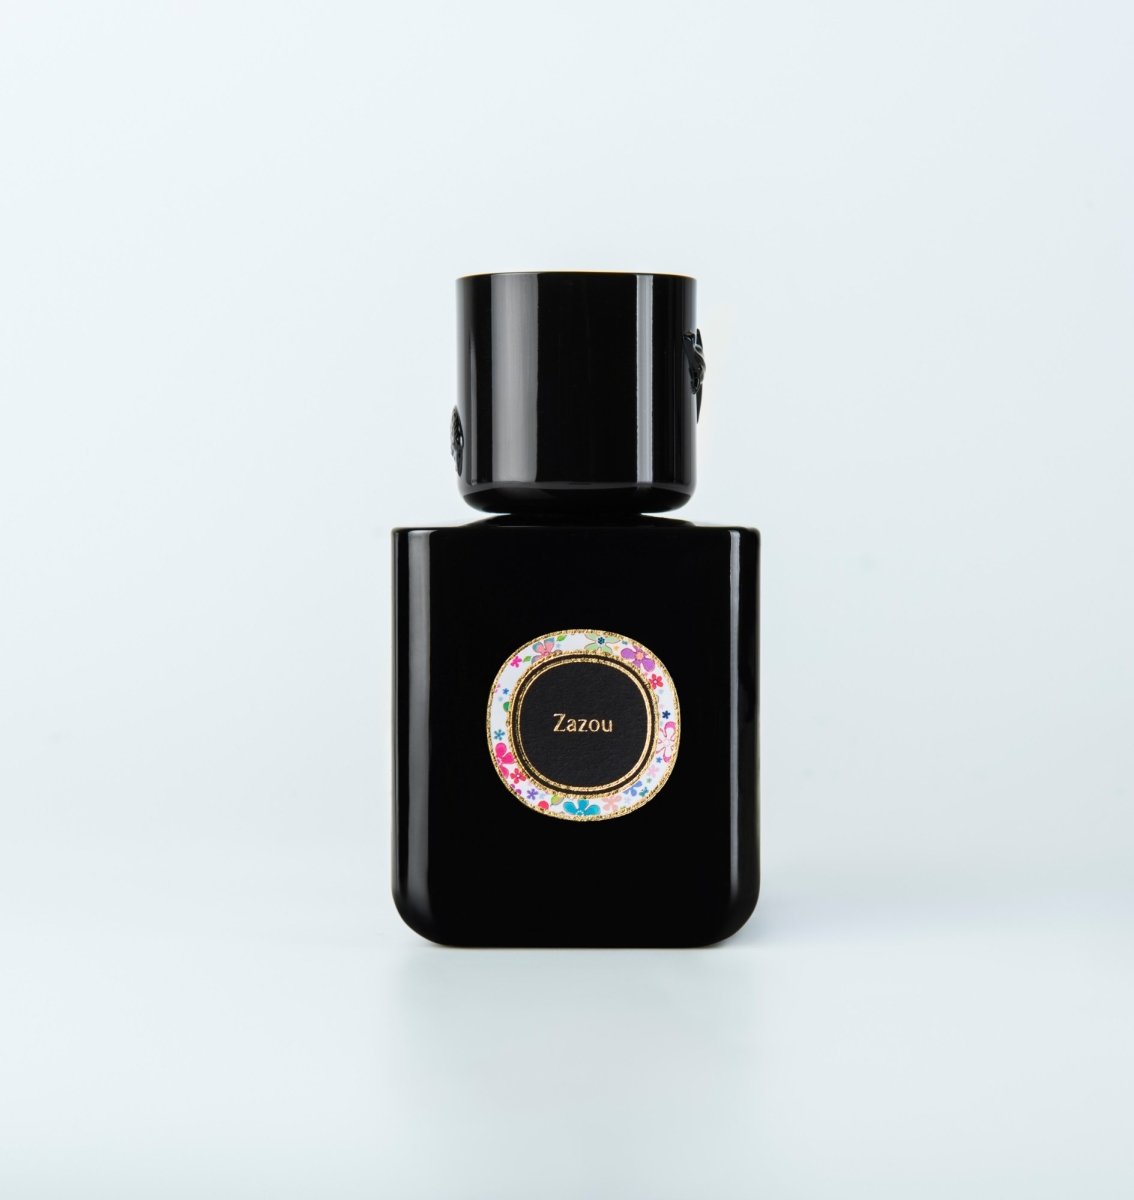 SABÉ MASSON Soft Perfume Liquide - Zazou 法國白香水 - 百花飛舞 [50ml] - MINT Organics